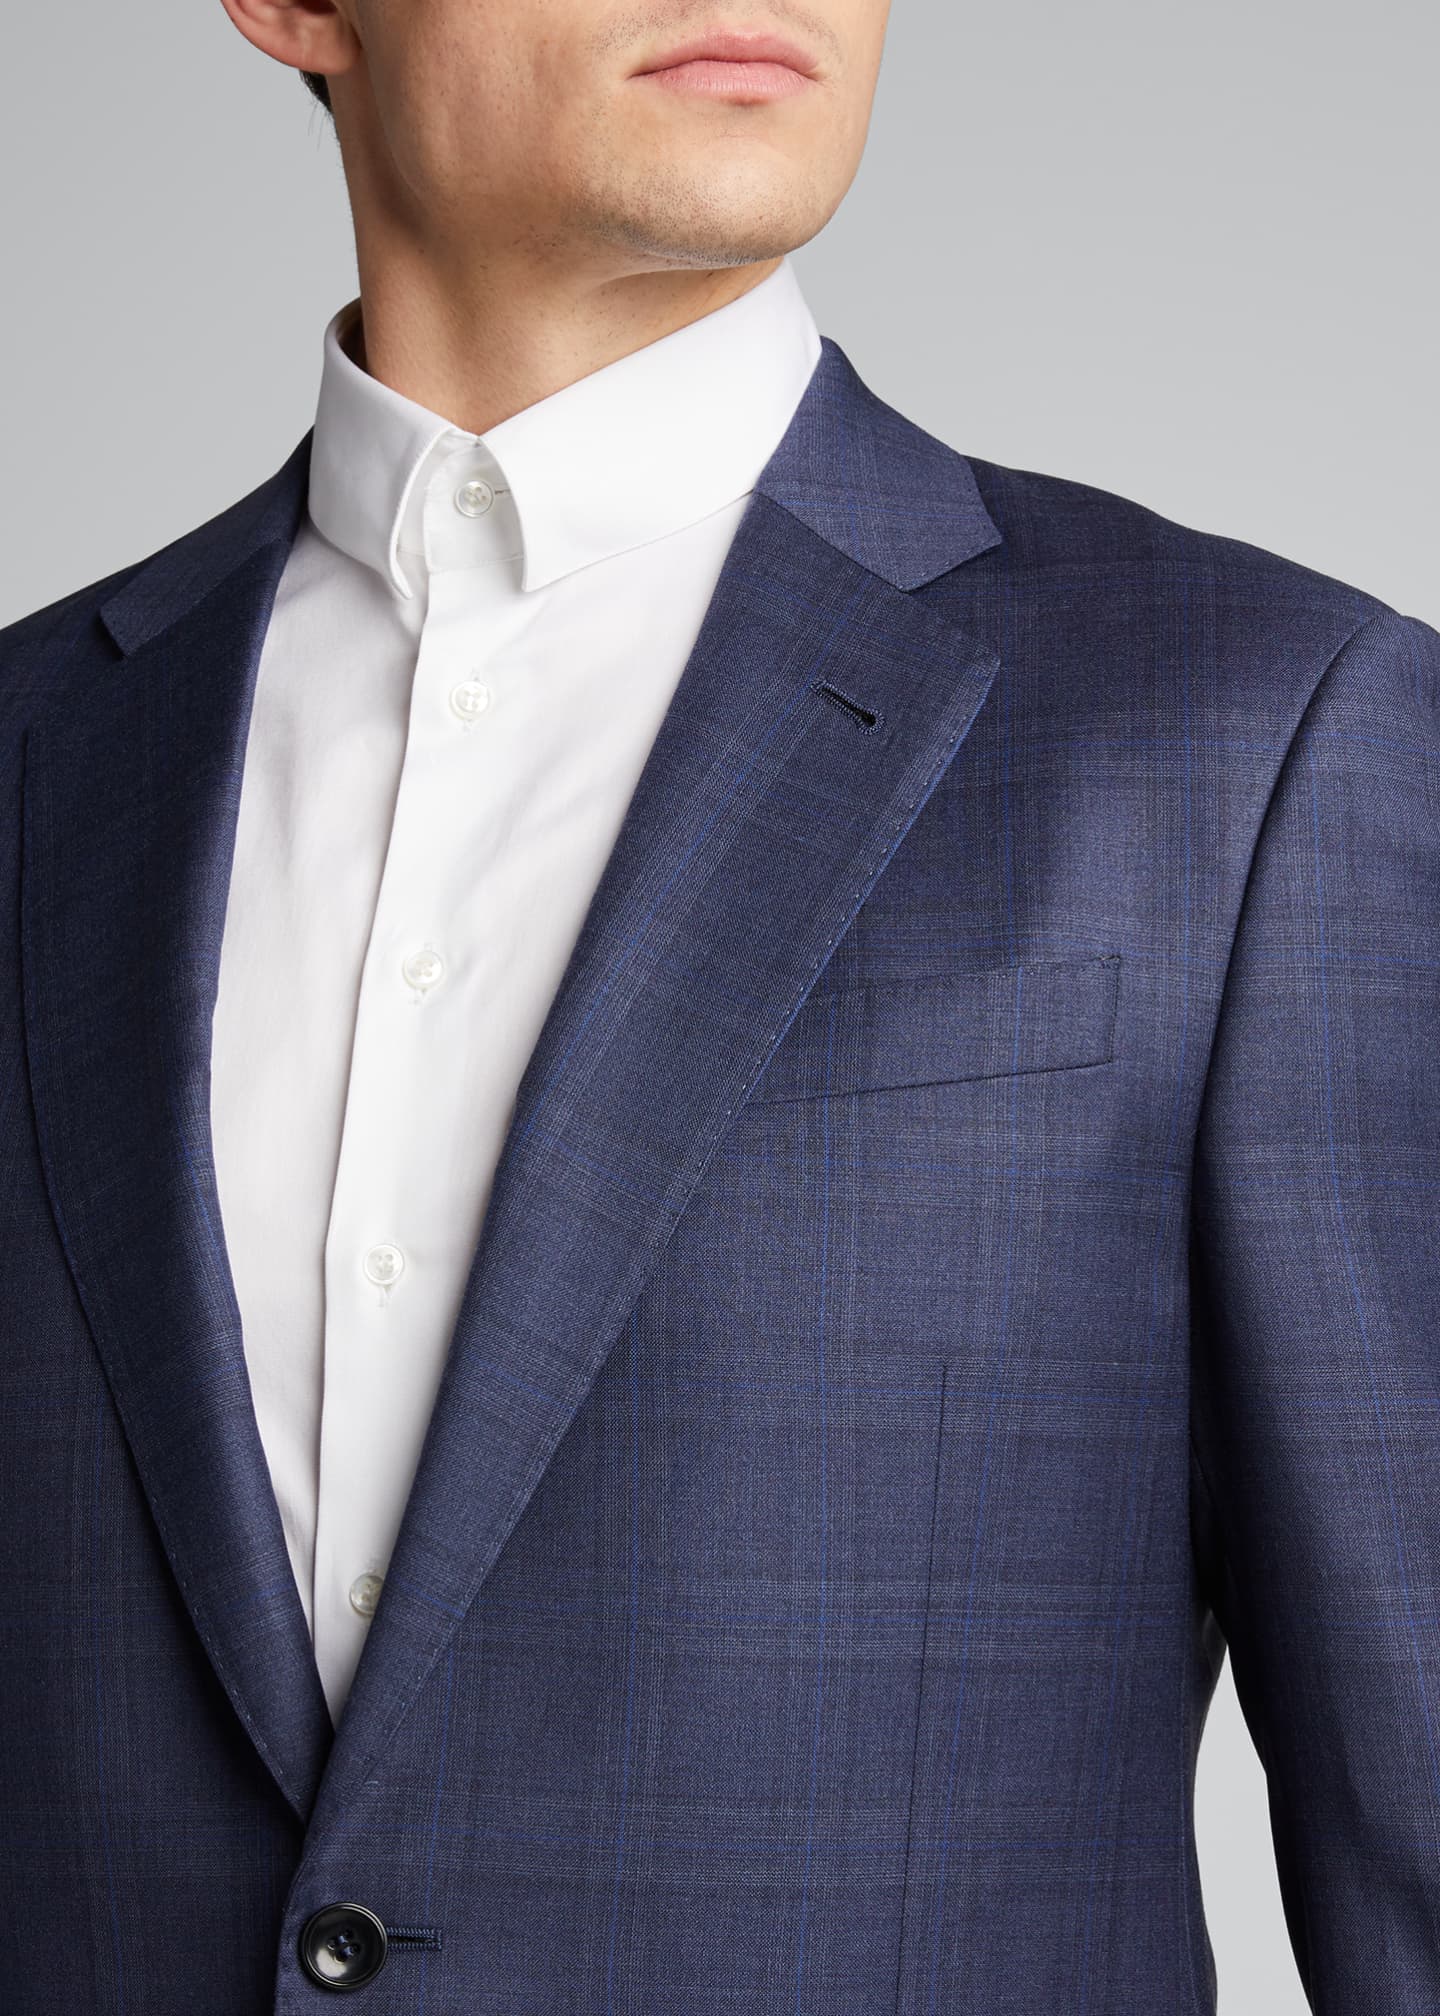 giorgio armani blue suit